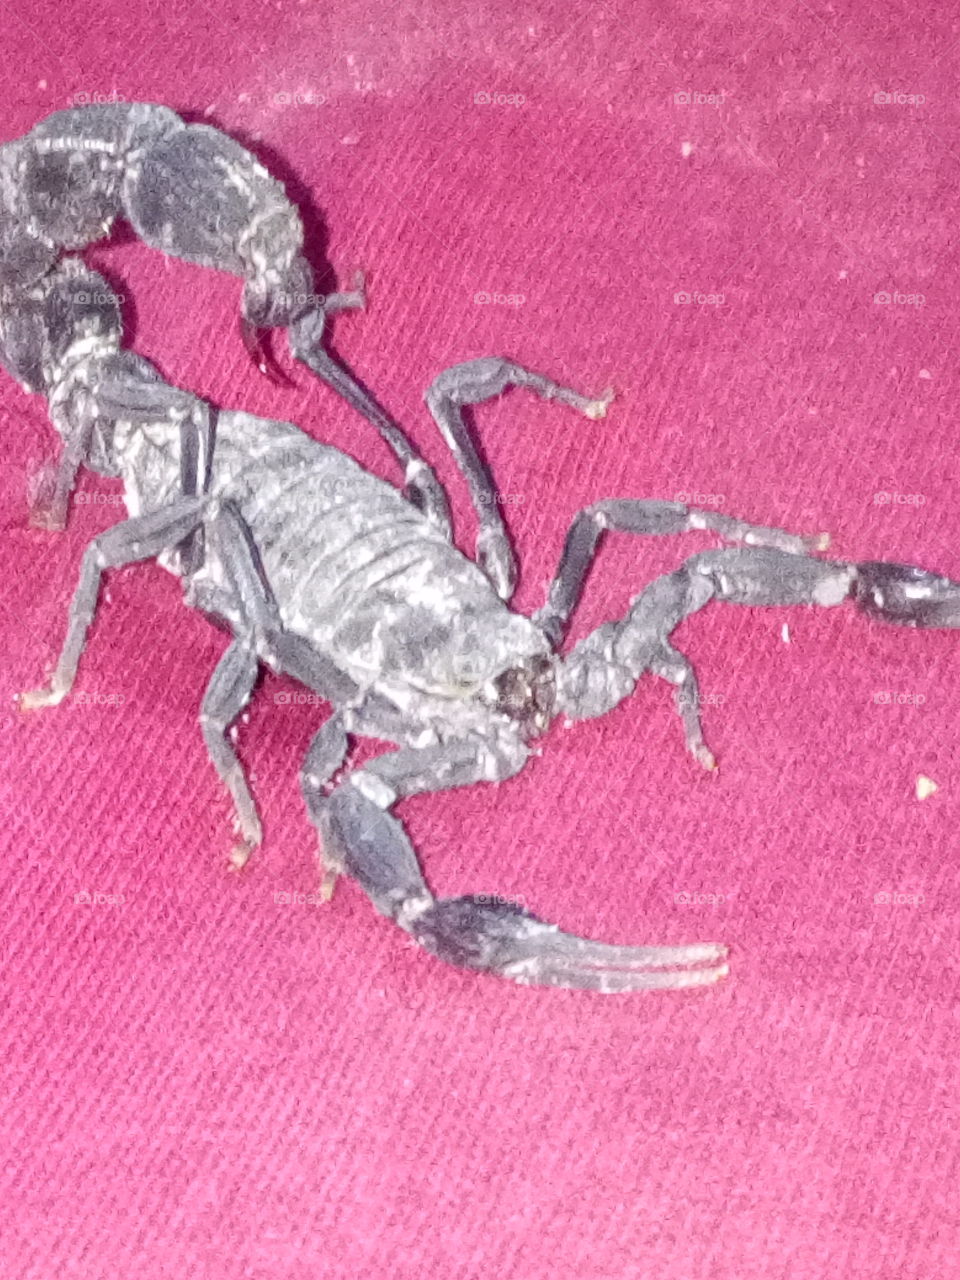 hot scorpion